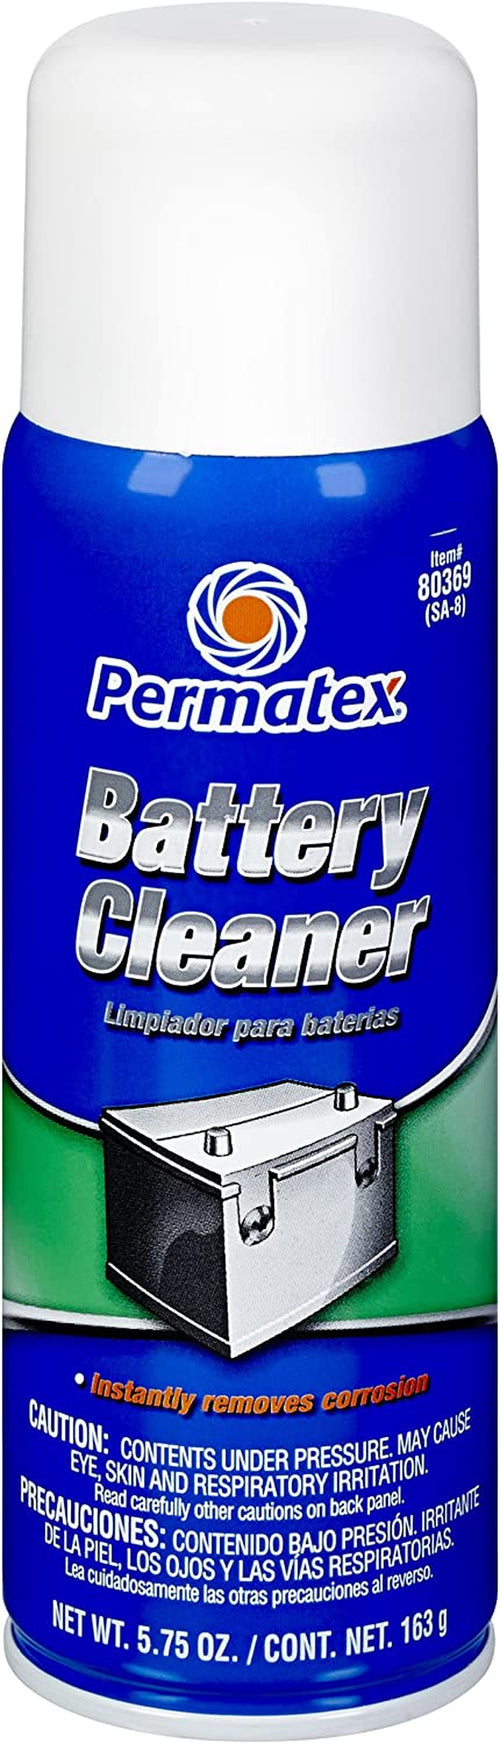 Permatex 80369 Battery Cleaner, 5.75 Oz. Net Aerosol Can